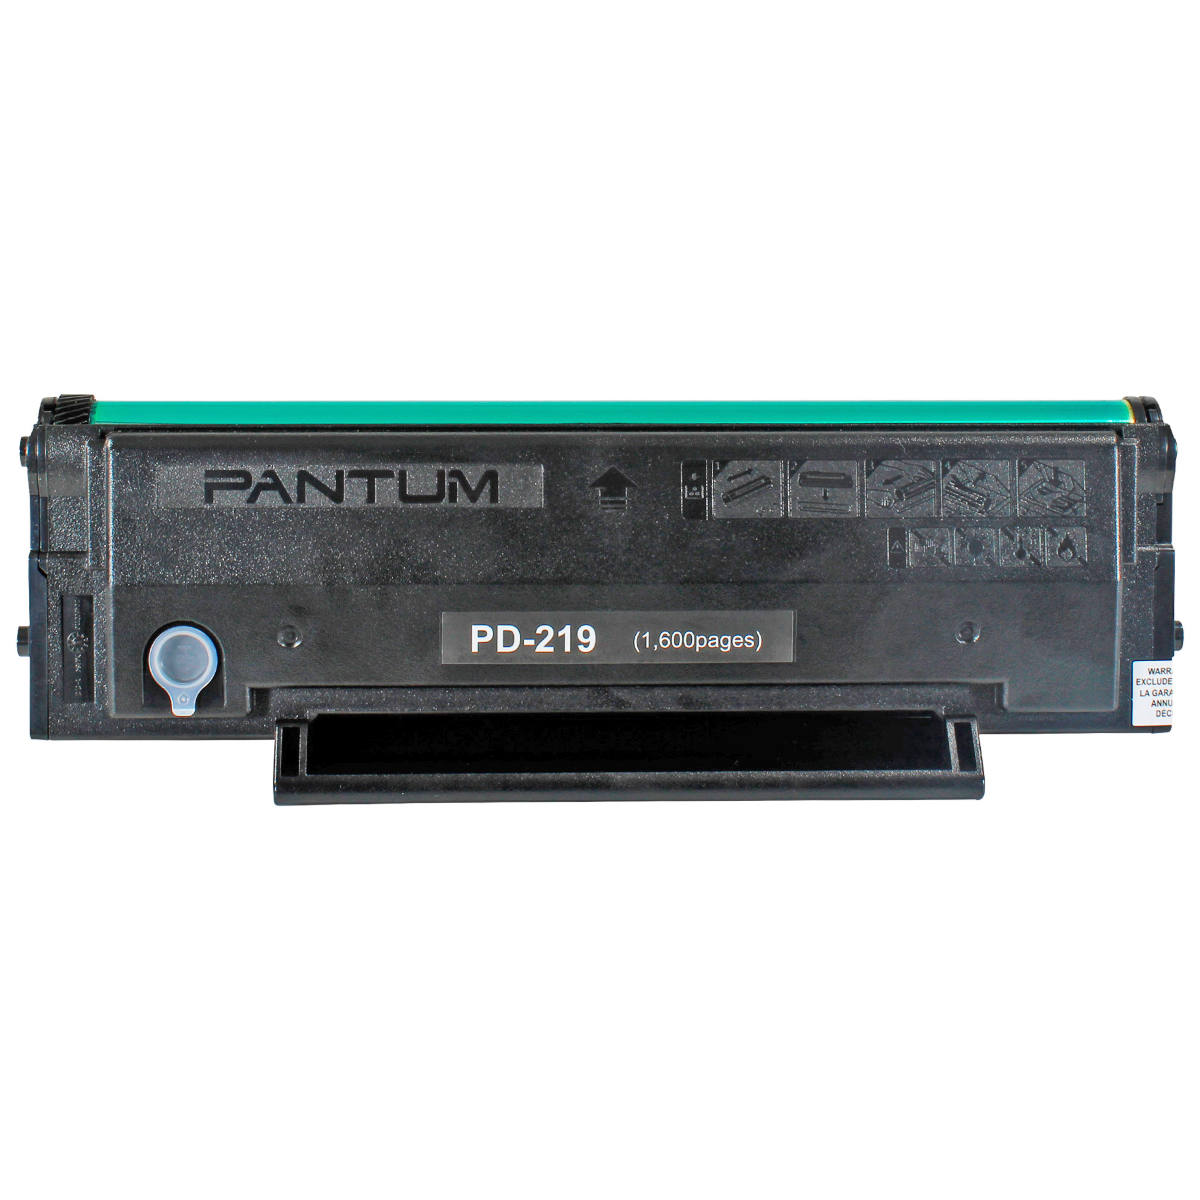 Toner Pantum PD-219 PD219 Original para Impressoras P2509w M6509nw M6559n M6559nw M6609n M6609nw P2509 M6559 Preto 1.600